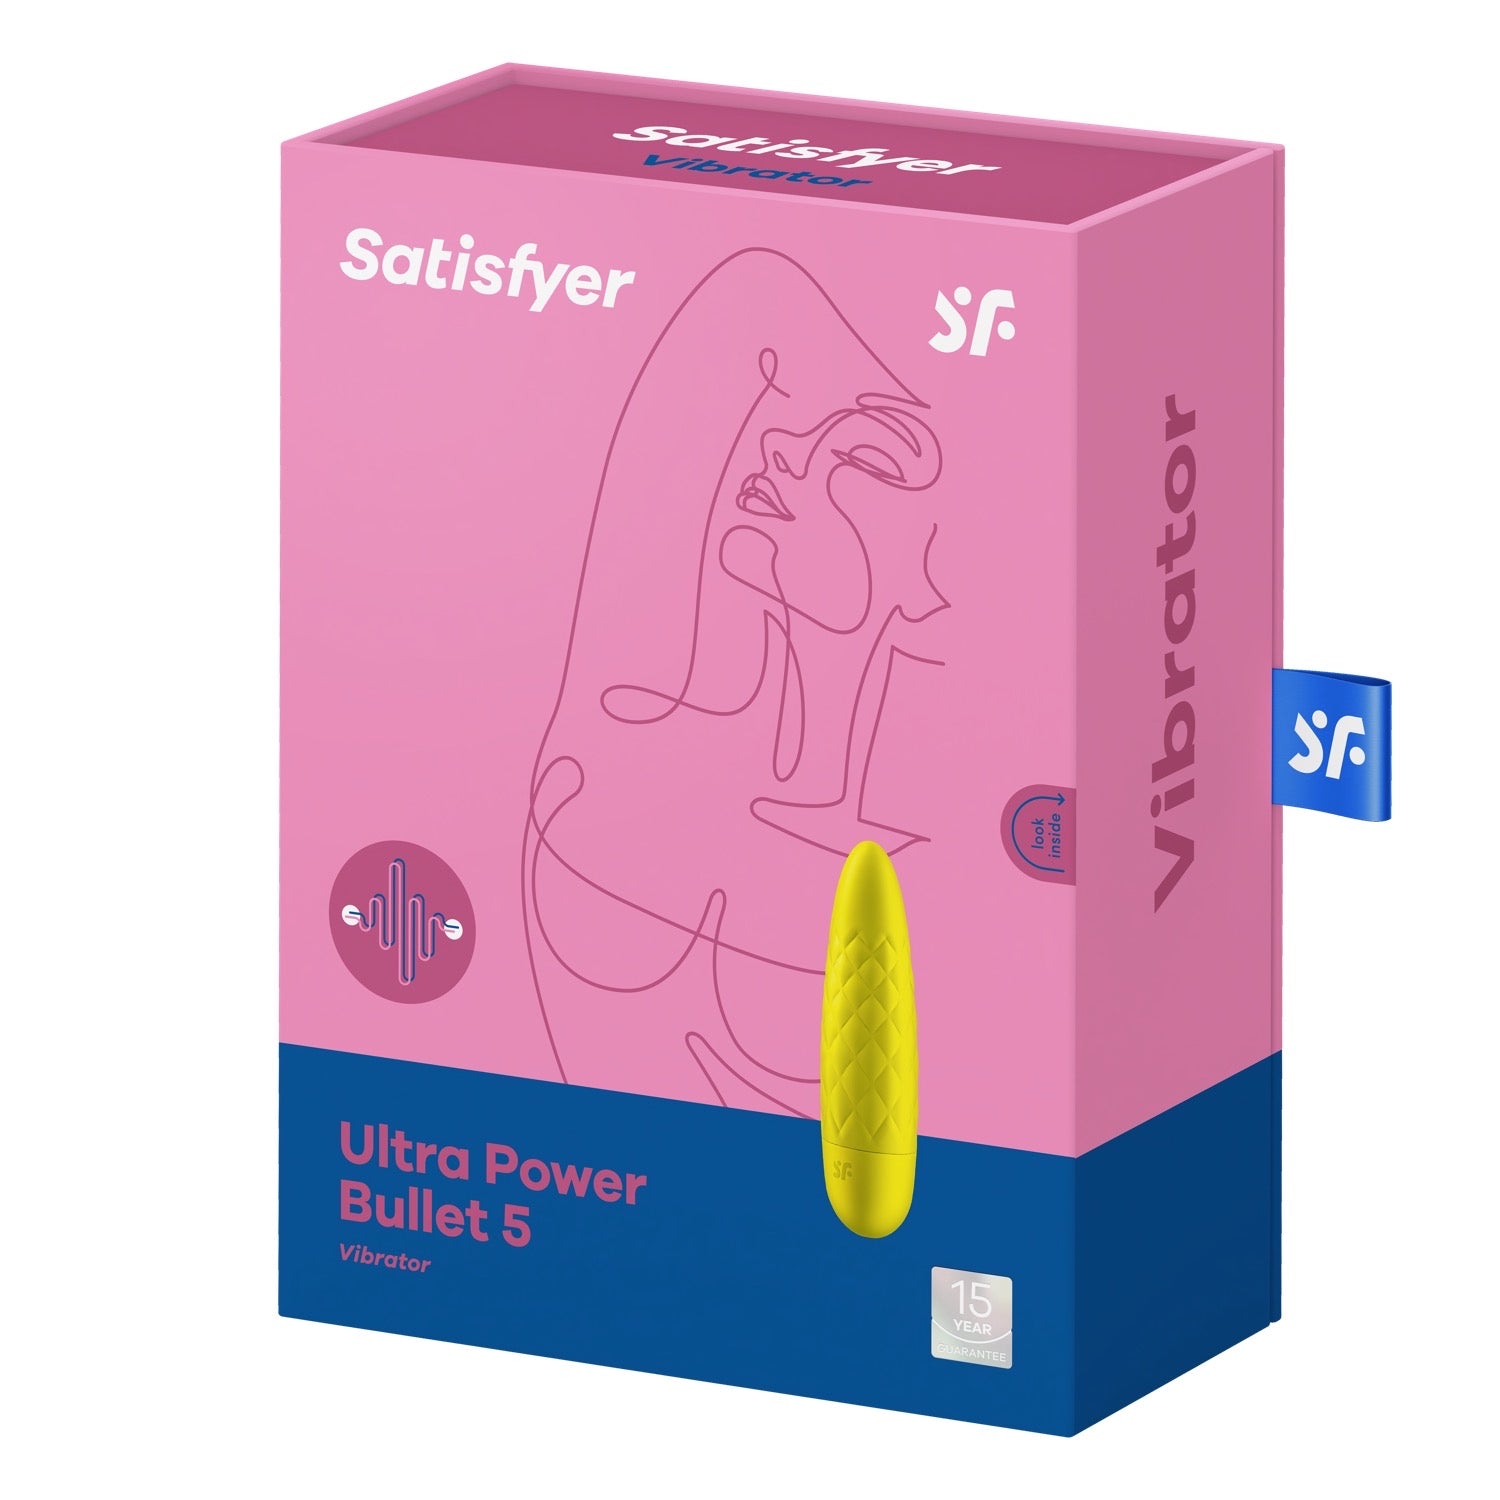 Satisfyer Ultra Power Bullet 5 - Yellow by Satisfyer